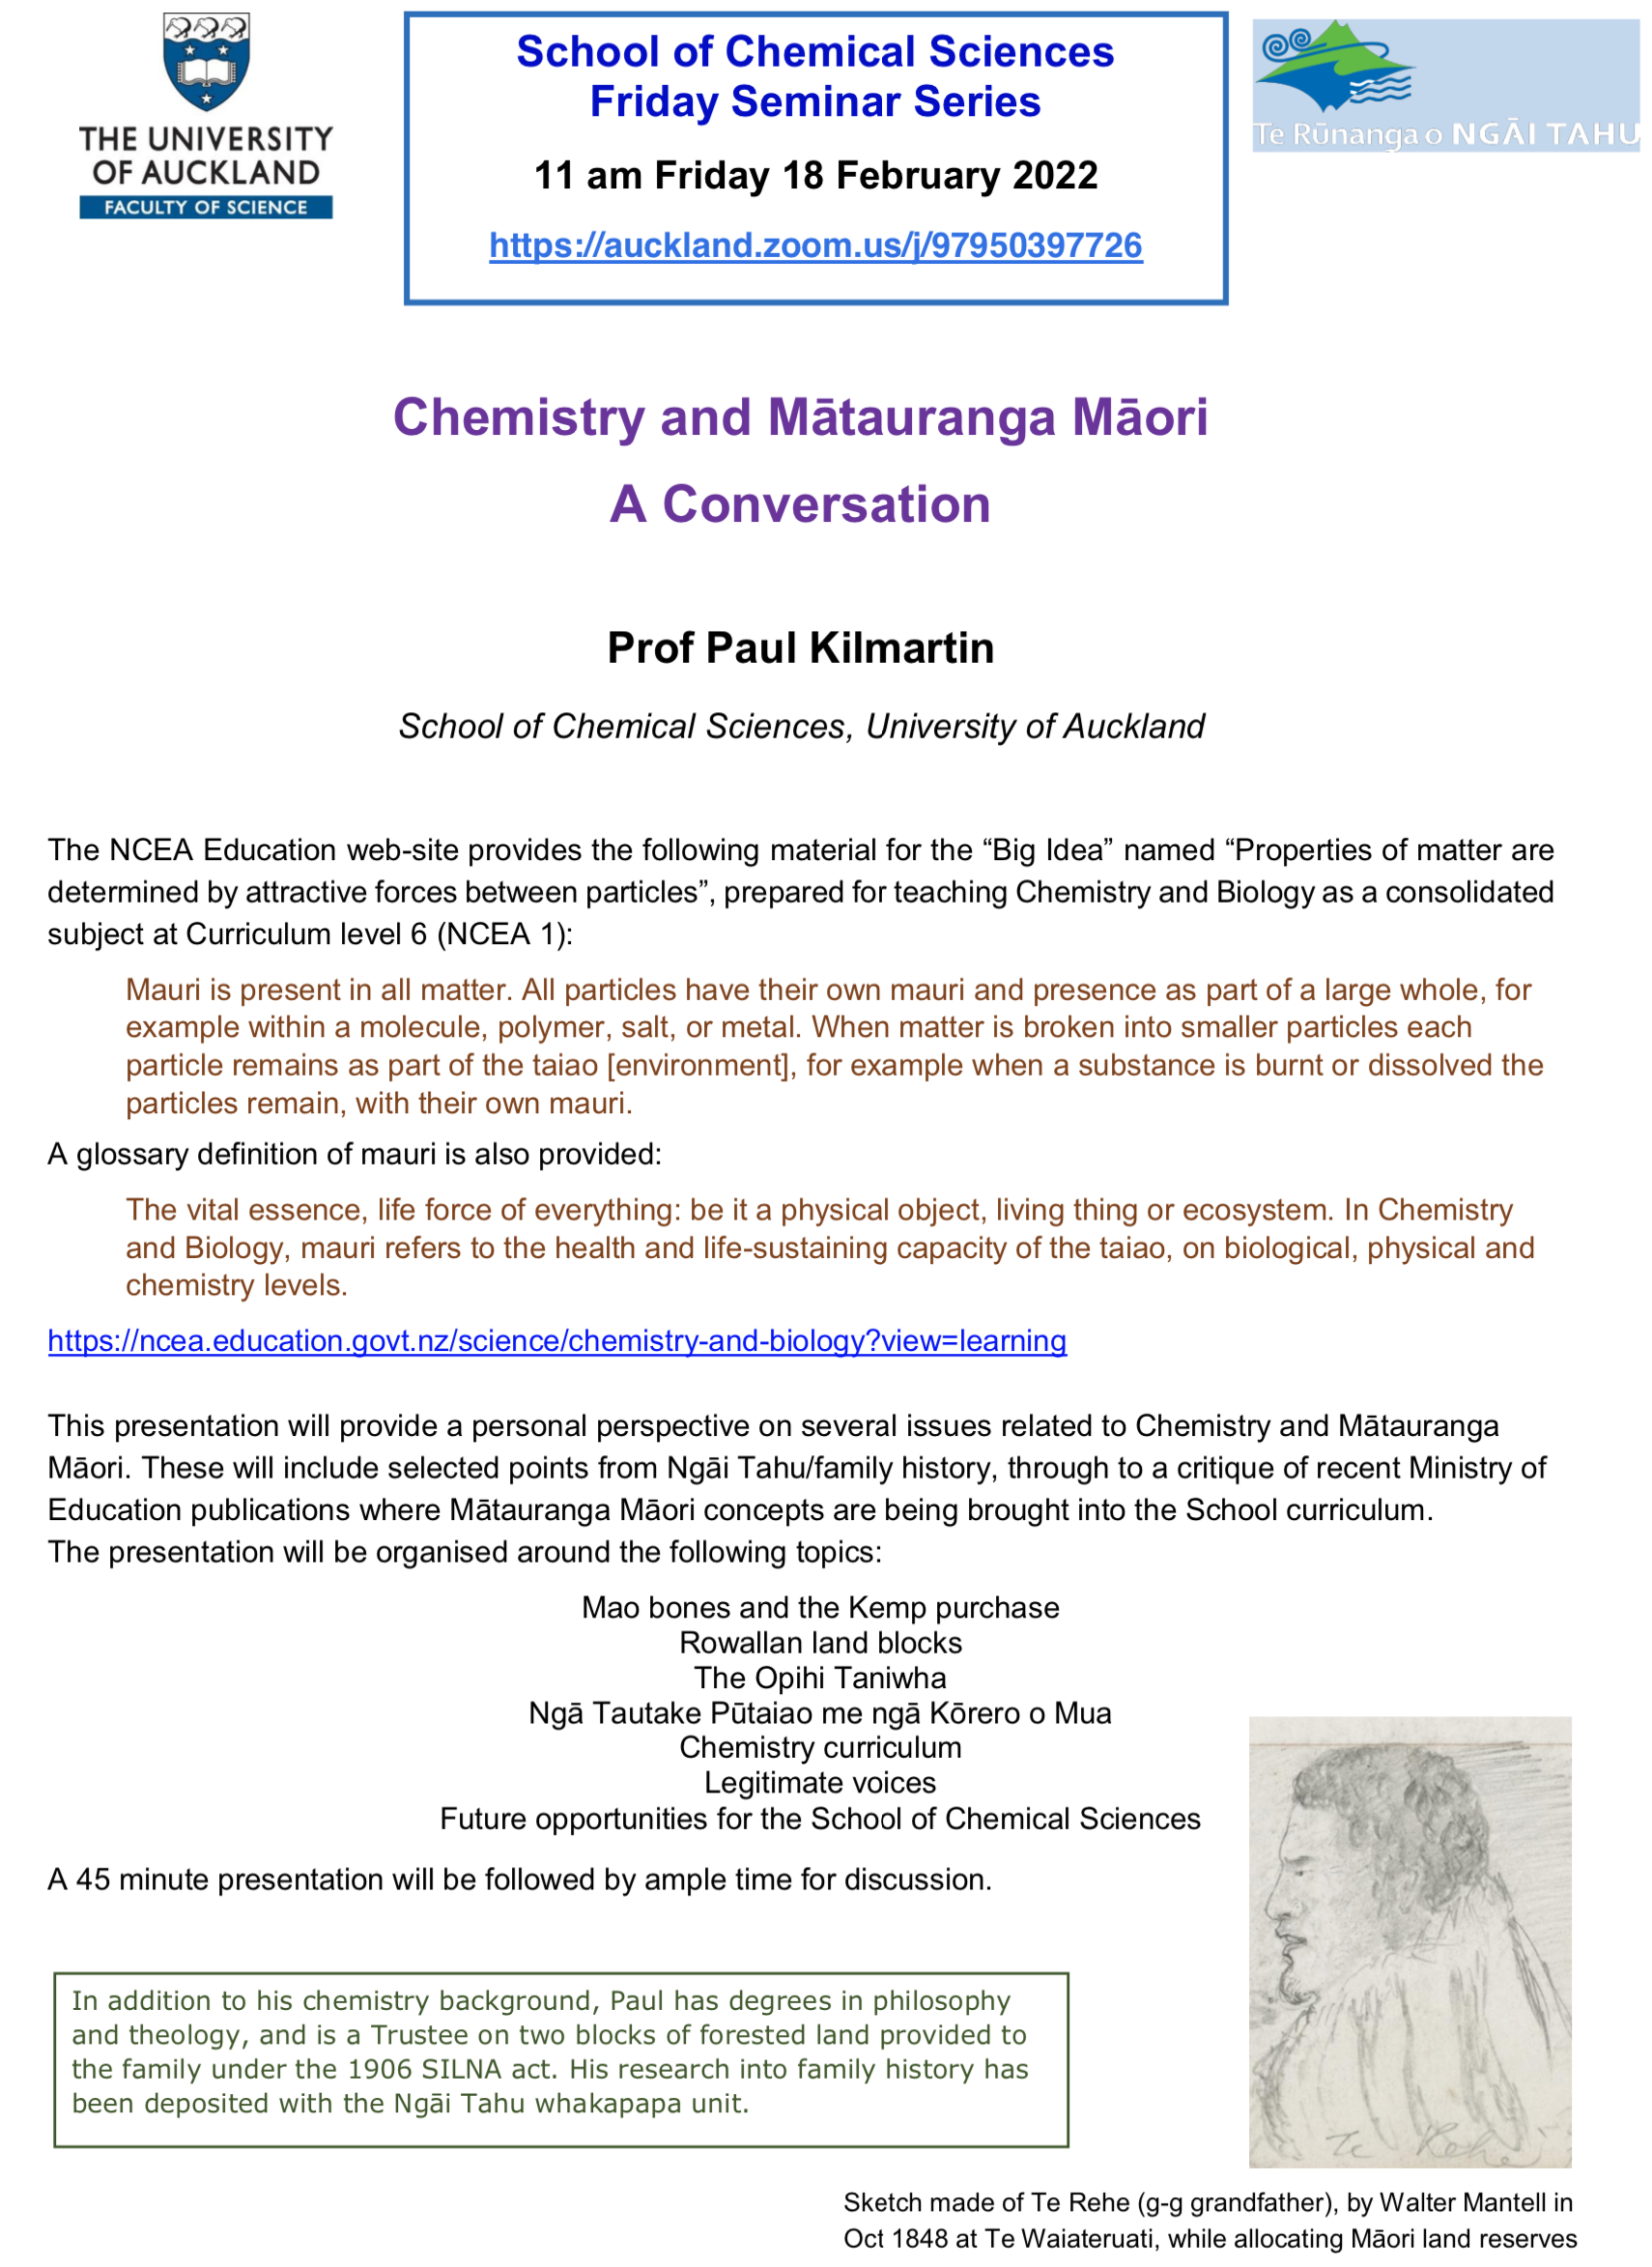 [Paul Kilmartin poster for Feb. 18 chemistry seminar on mātauranga Māori]